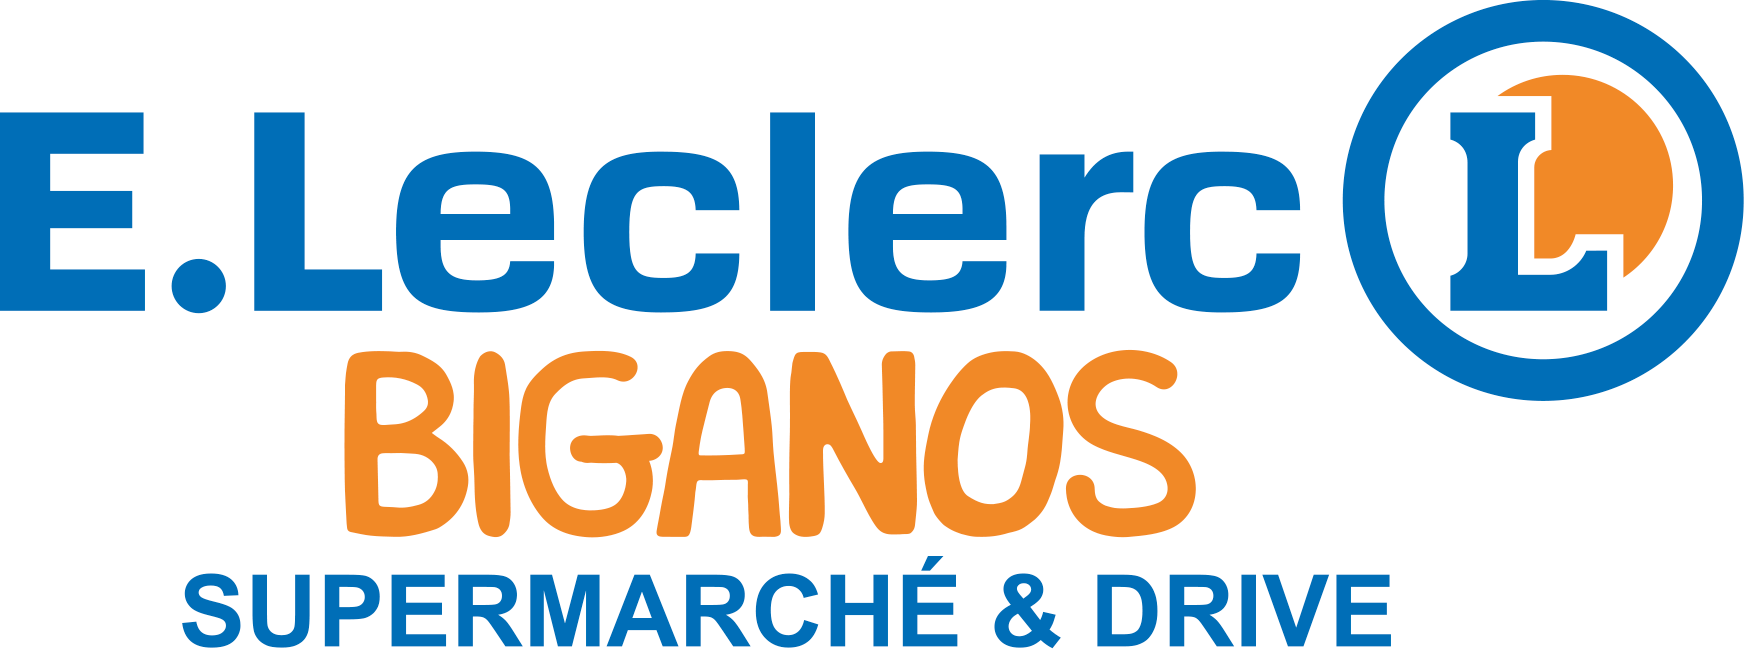 http://lacanchaboienne.fr/wp-content/uploads/2022/10/logo-leclerc-biganos.png